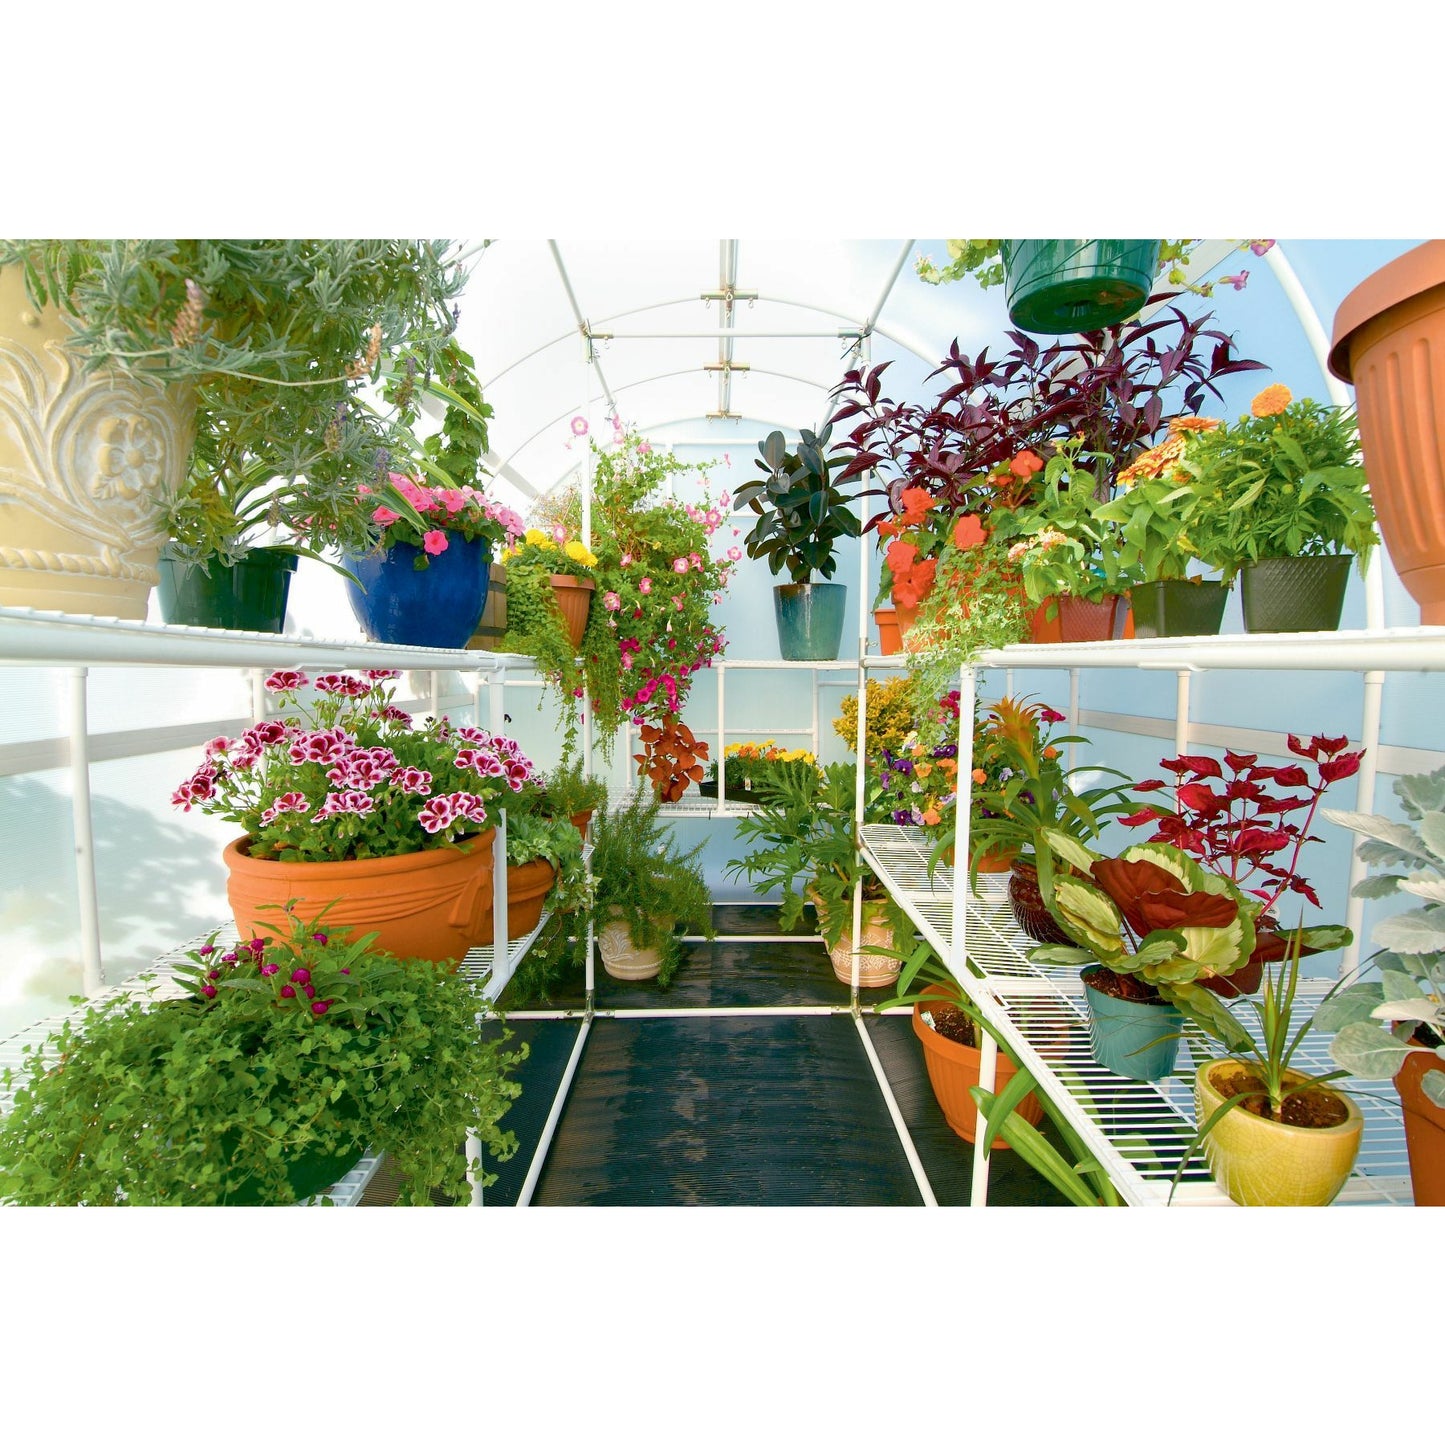 Solexx Gardener's Oasis Greenhouse 8'W x 24'L x 8'H